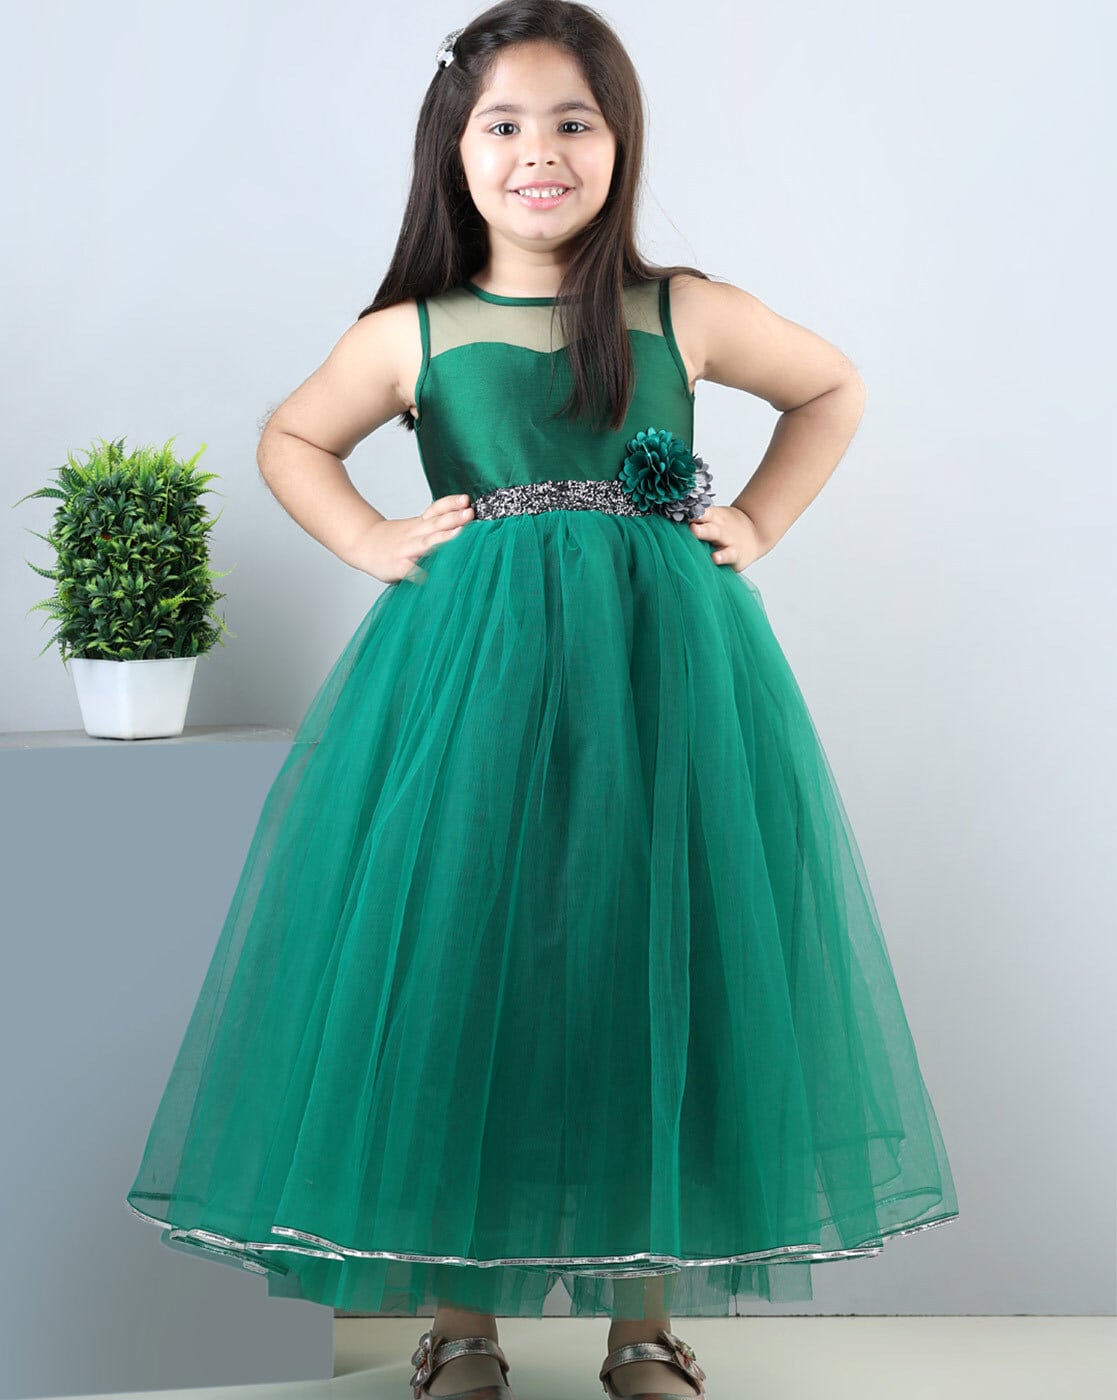 Shop now Girl's Green Printed Layered Dress | At Stylobug